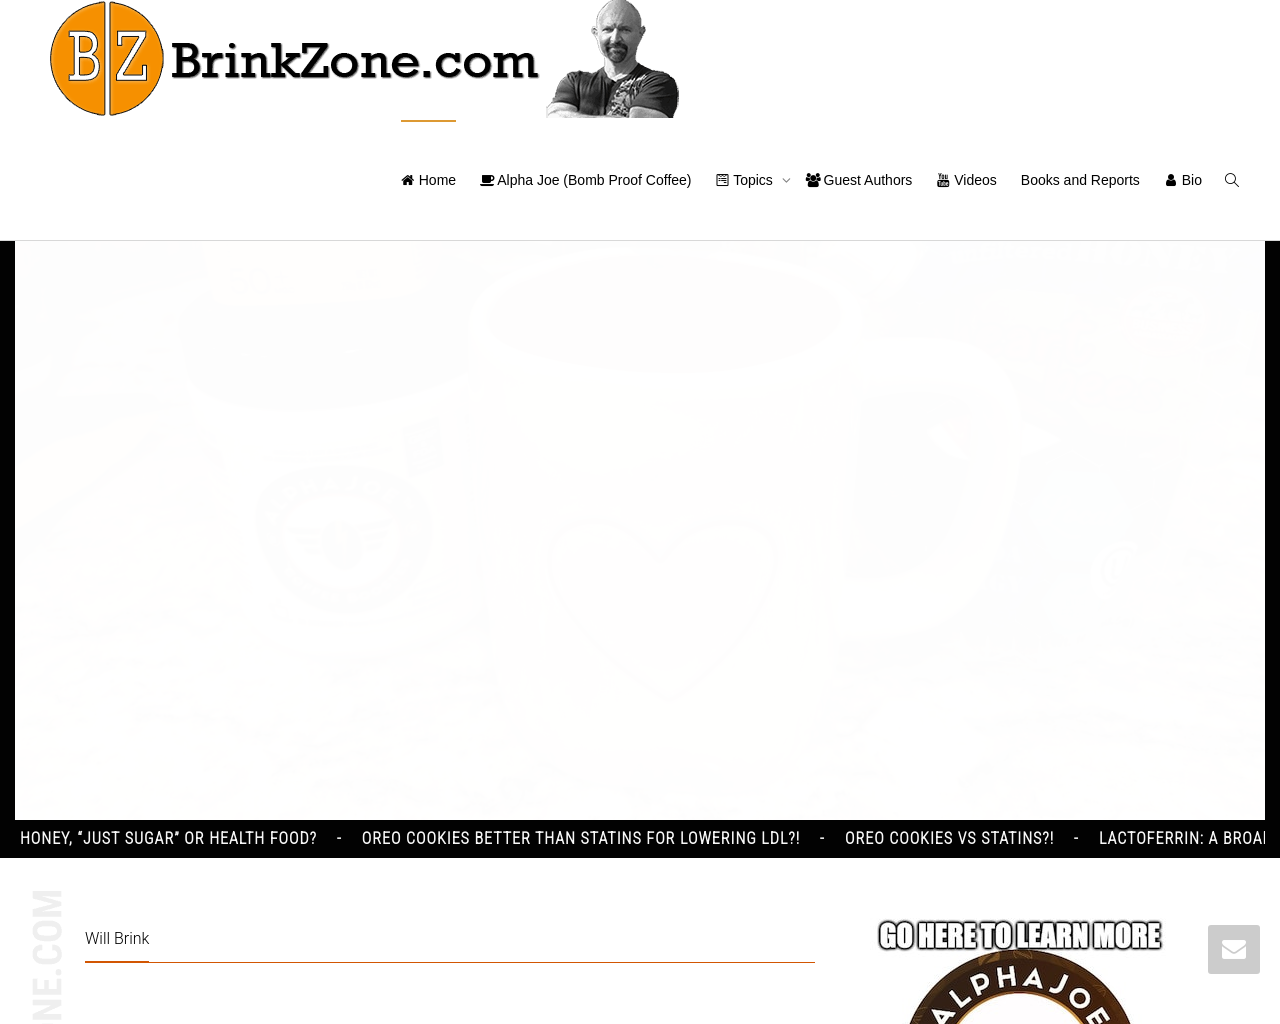 brinkzone.com